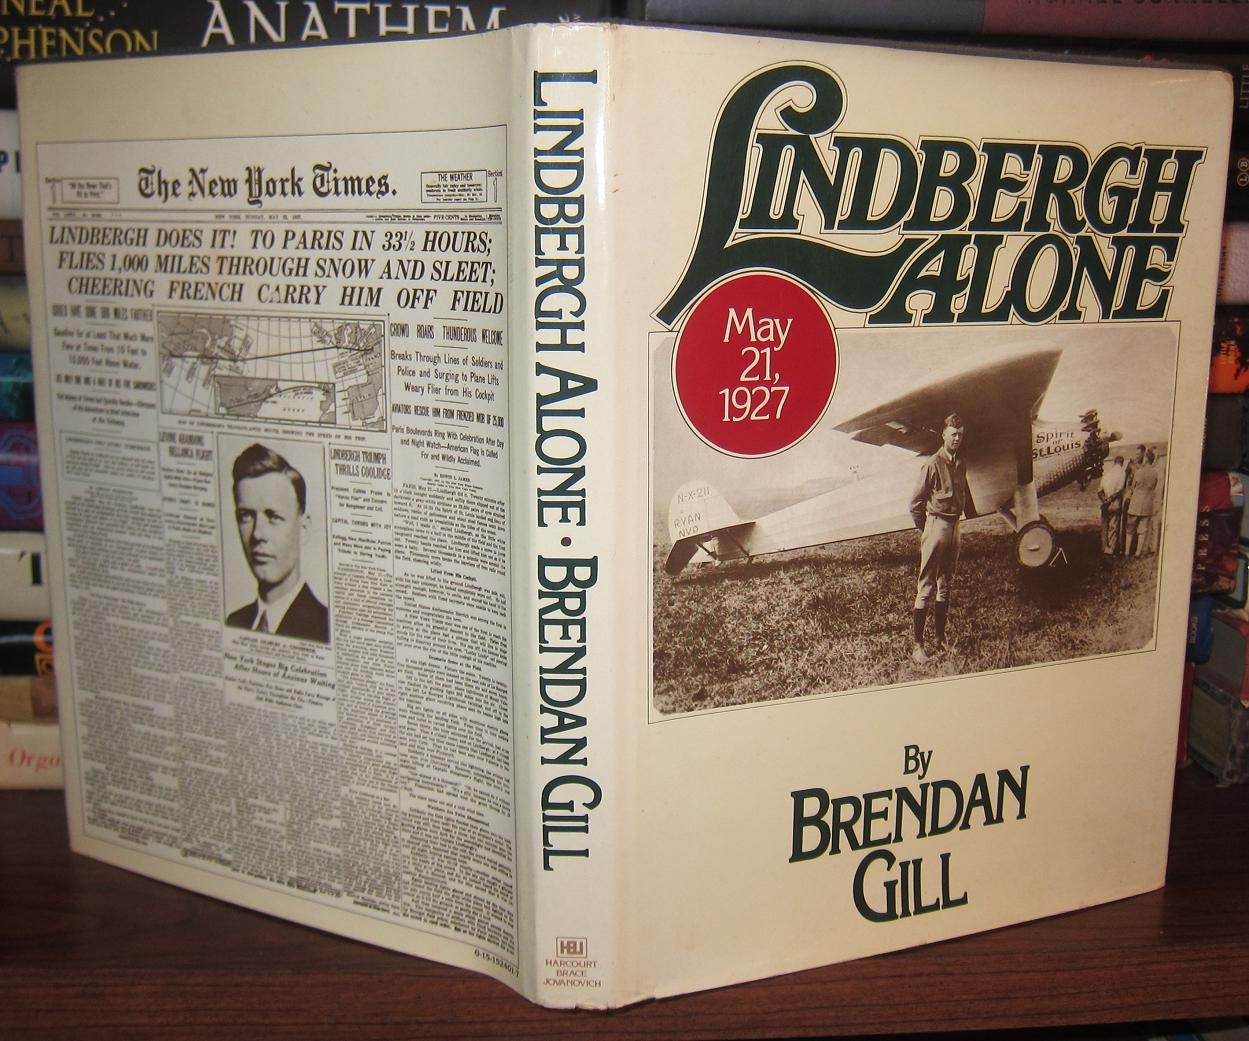 GILL, BRENDAN - Lindbergh Alone